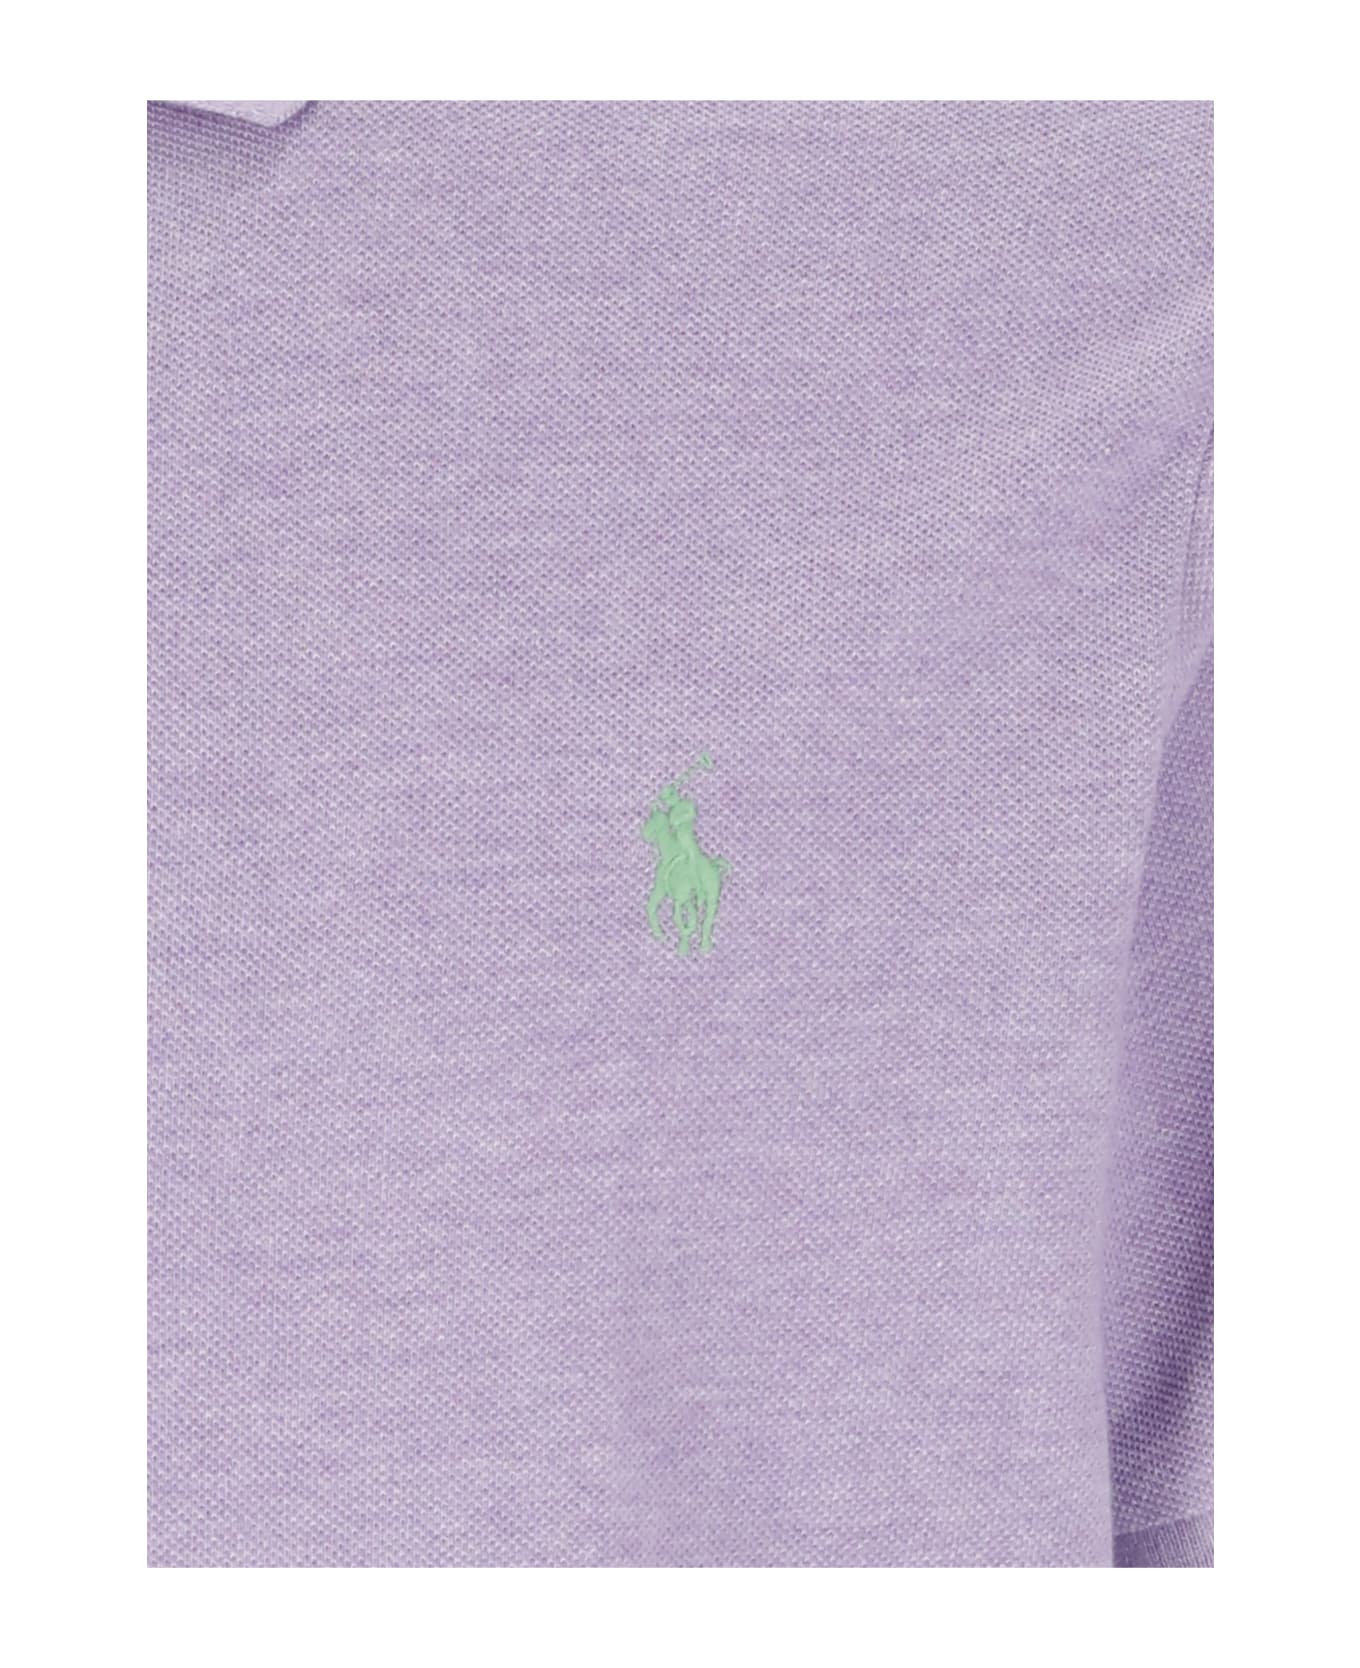 Ralph Lauren Polo Shirt With Pony - Purple